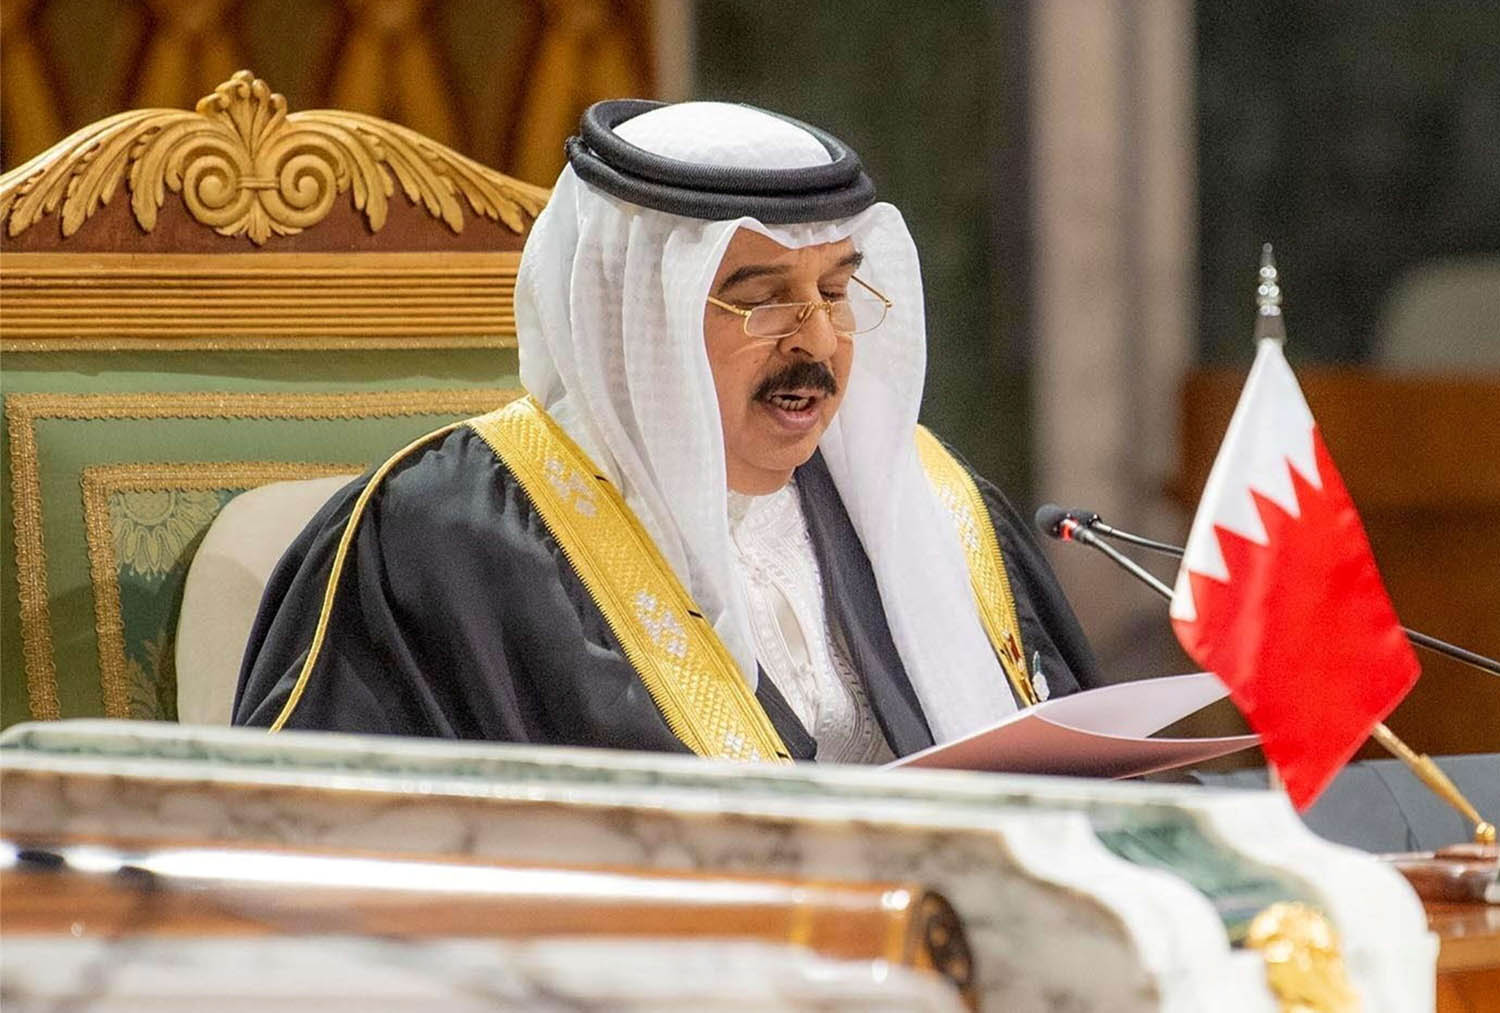 Bahrain's King Hamad bin Isa al-Khalifa 